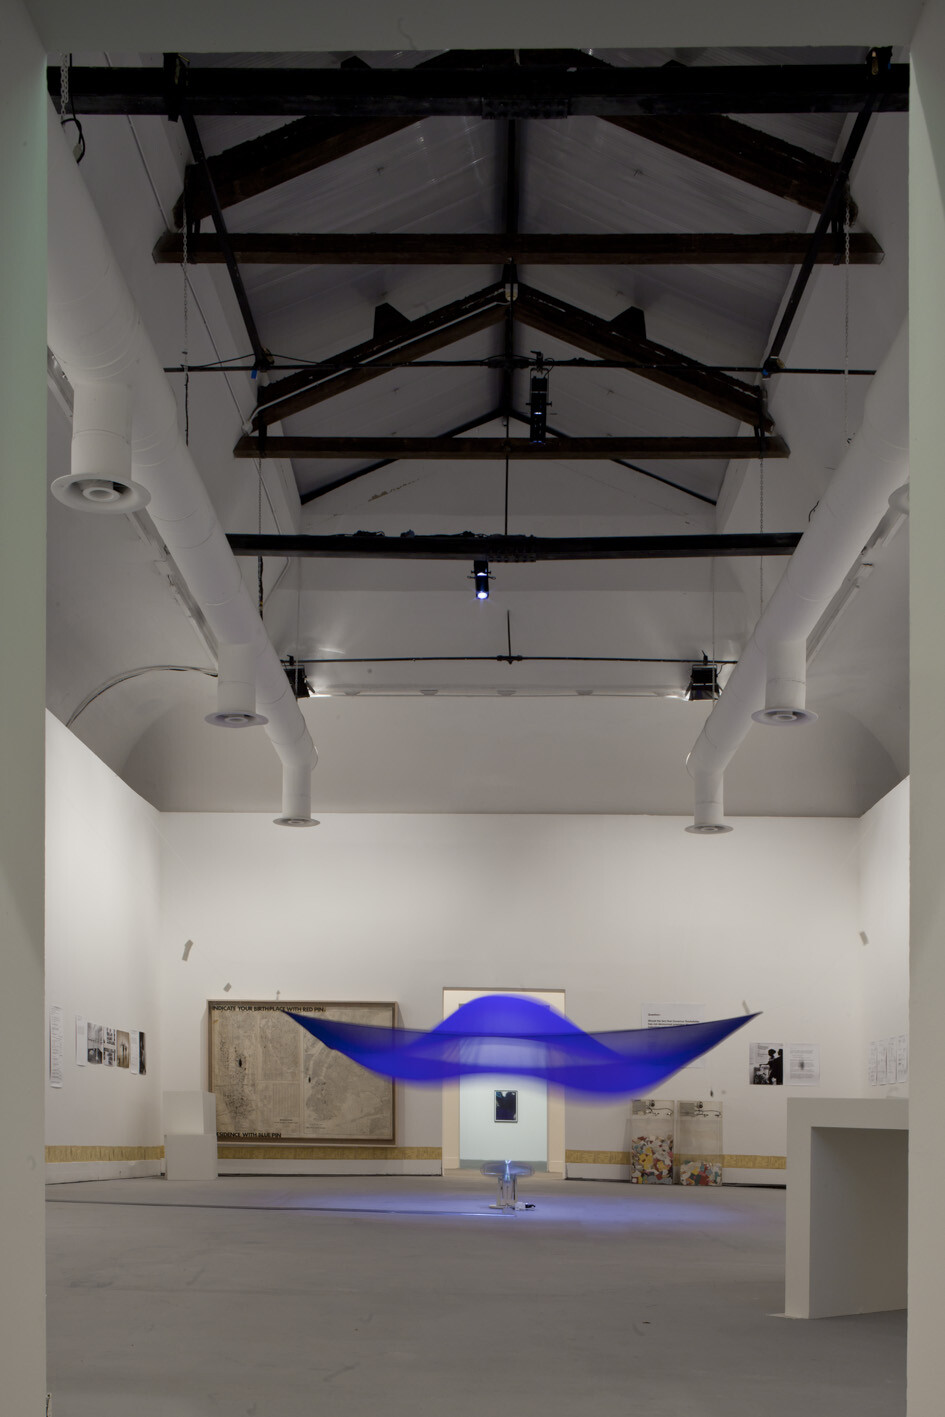 e-flux journal 56th Venice Biennale – SUPERCOMMUNITY – Mercury Retrograde